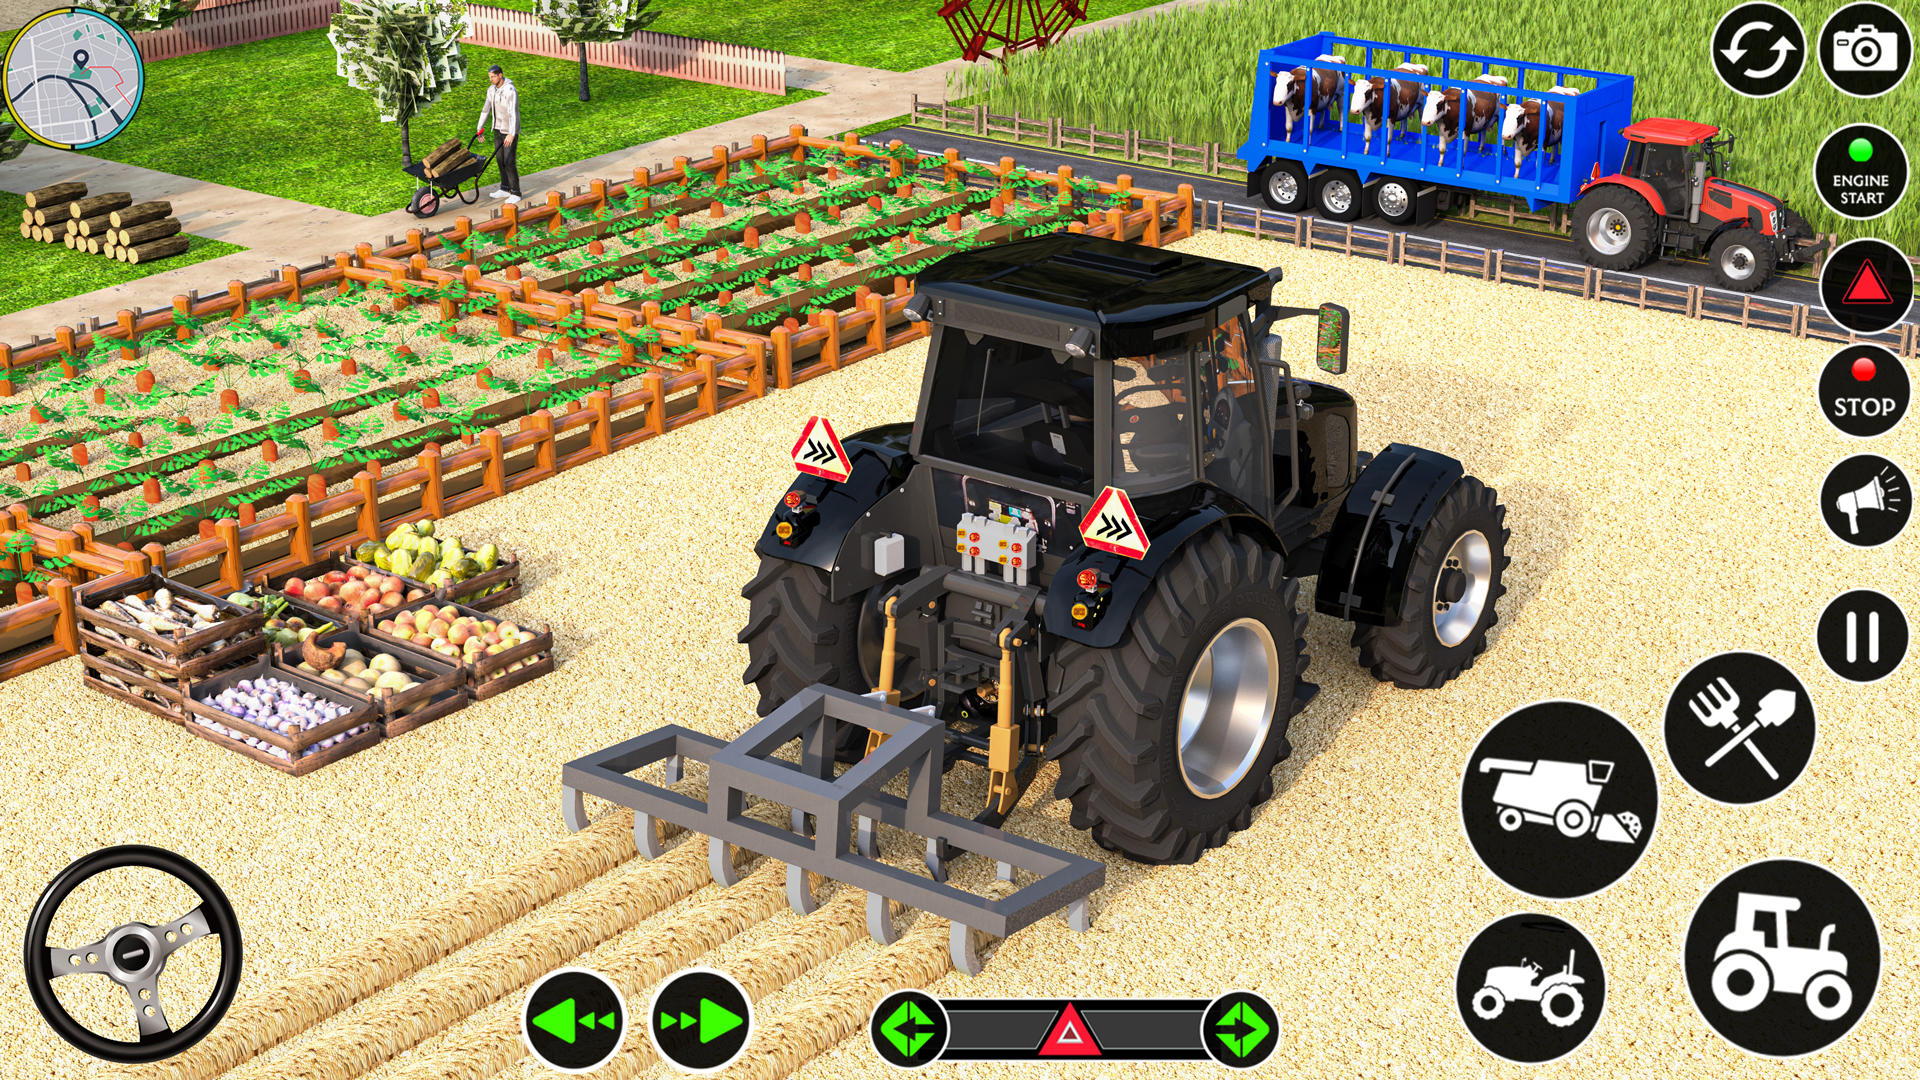 Grand farming simulator-Tractor Driving Games - Baixar APK para Android